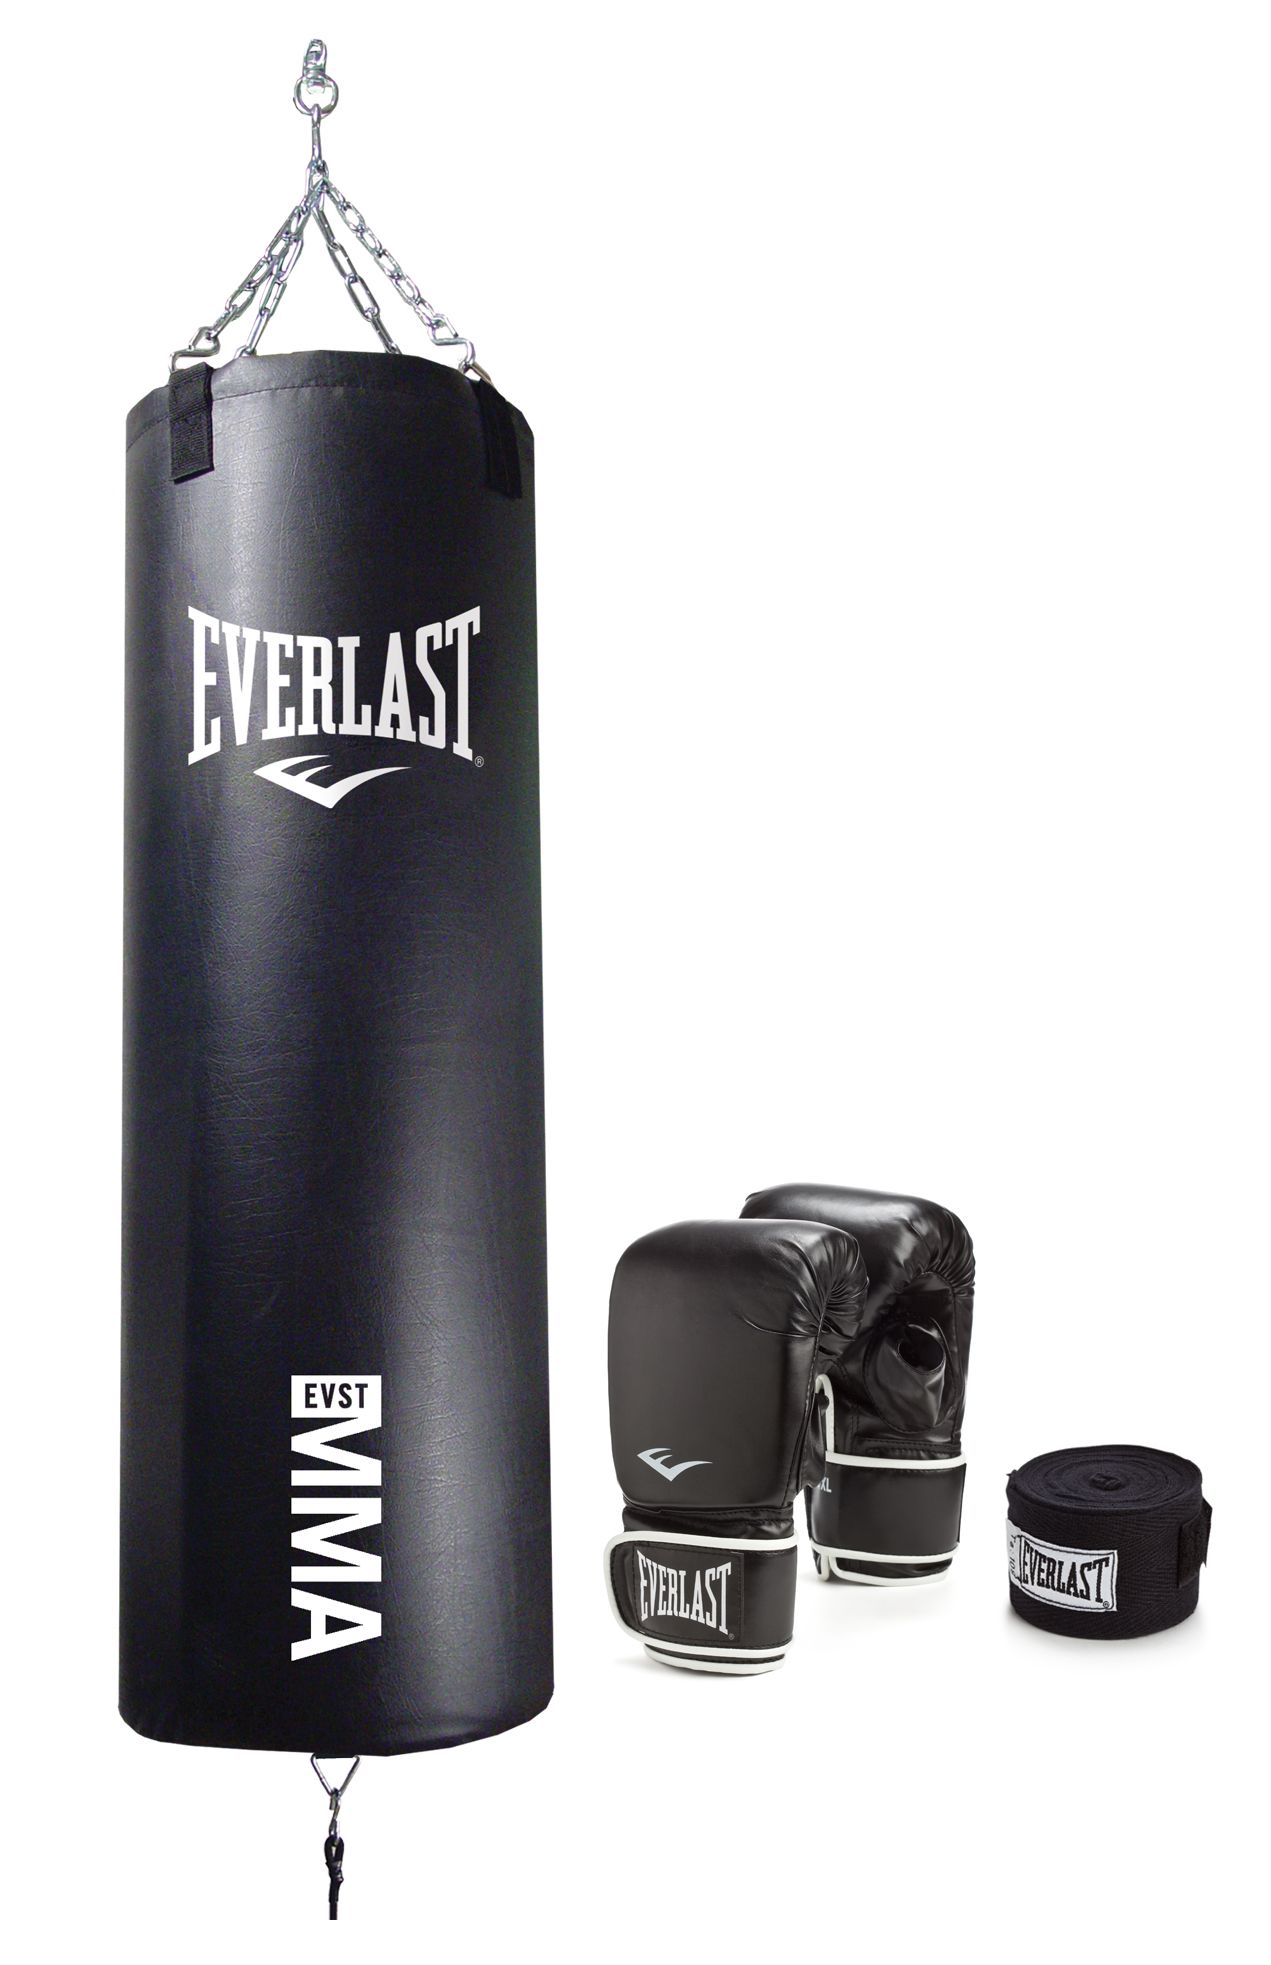 Everlast® MMA 70 lb Heavy Bag Kit Review - Boxing Equipment Reviews